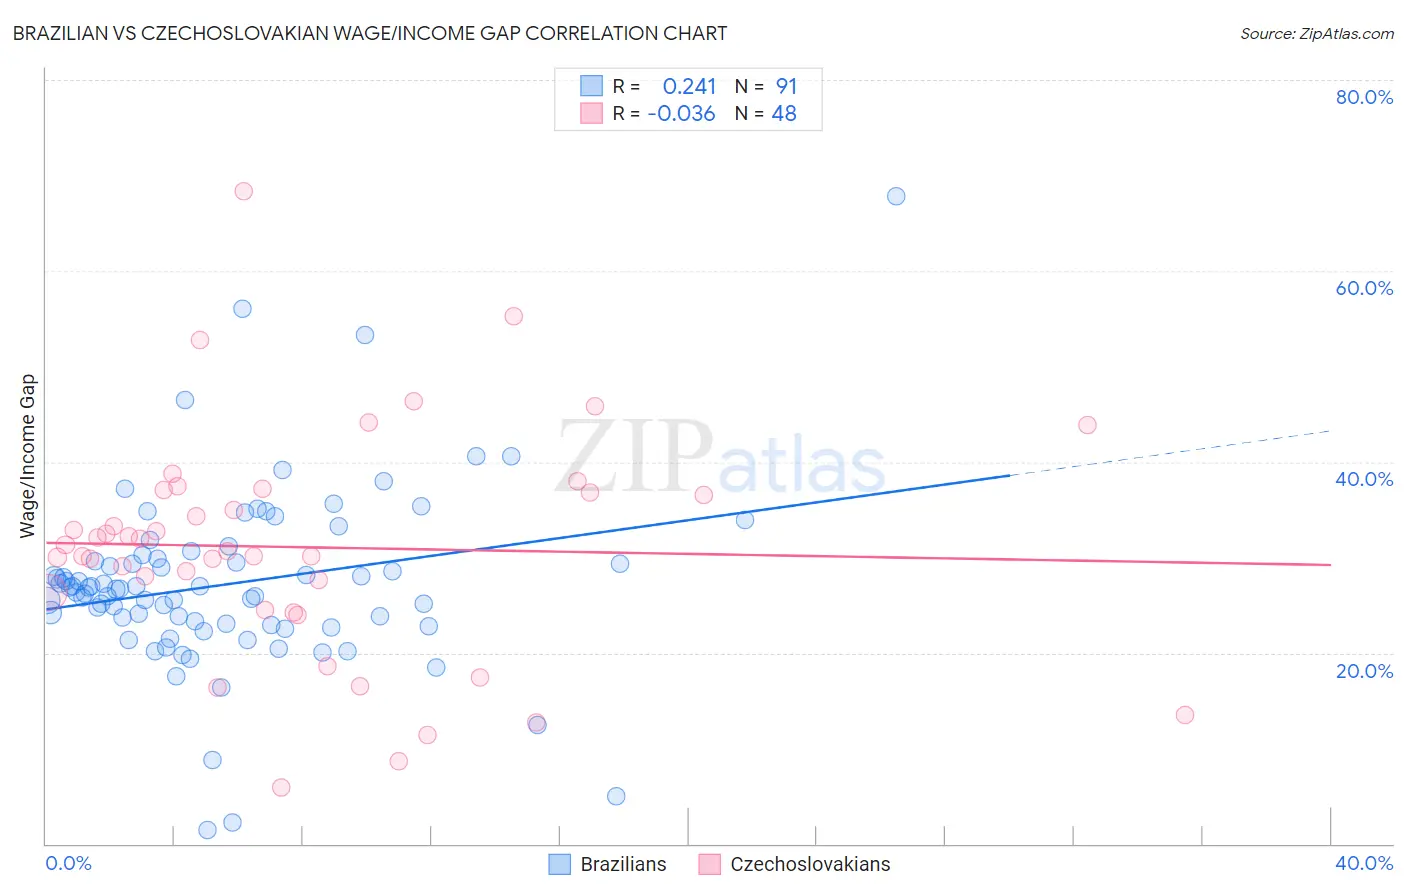 Brazilian vs Czechoslovakian Wage/Income Gap